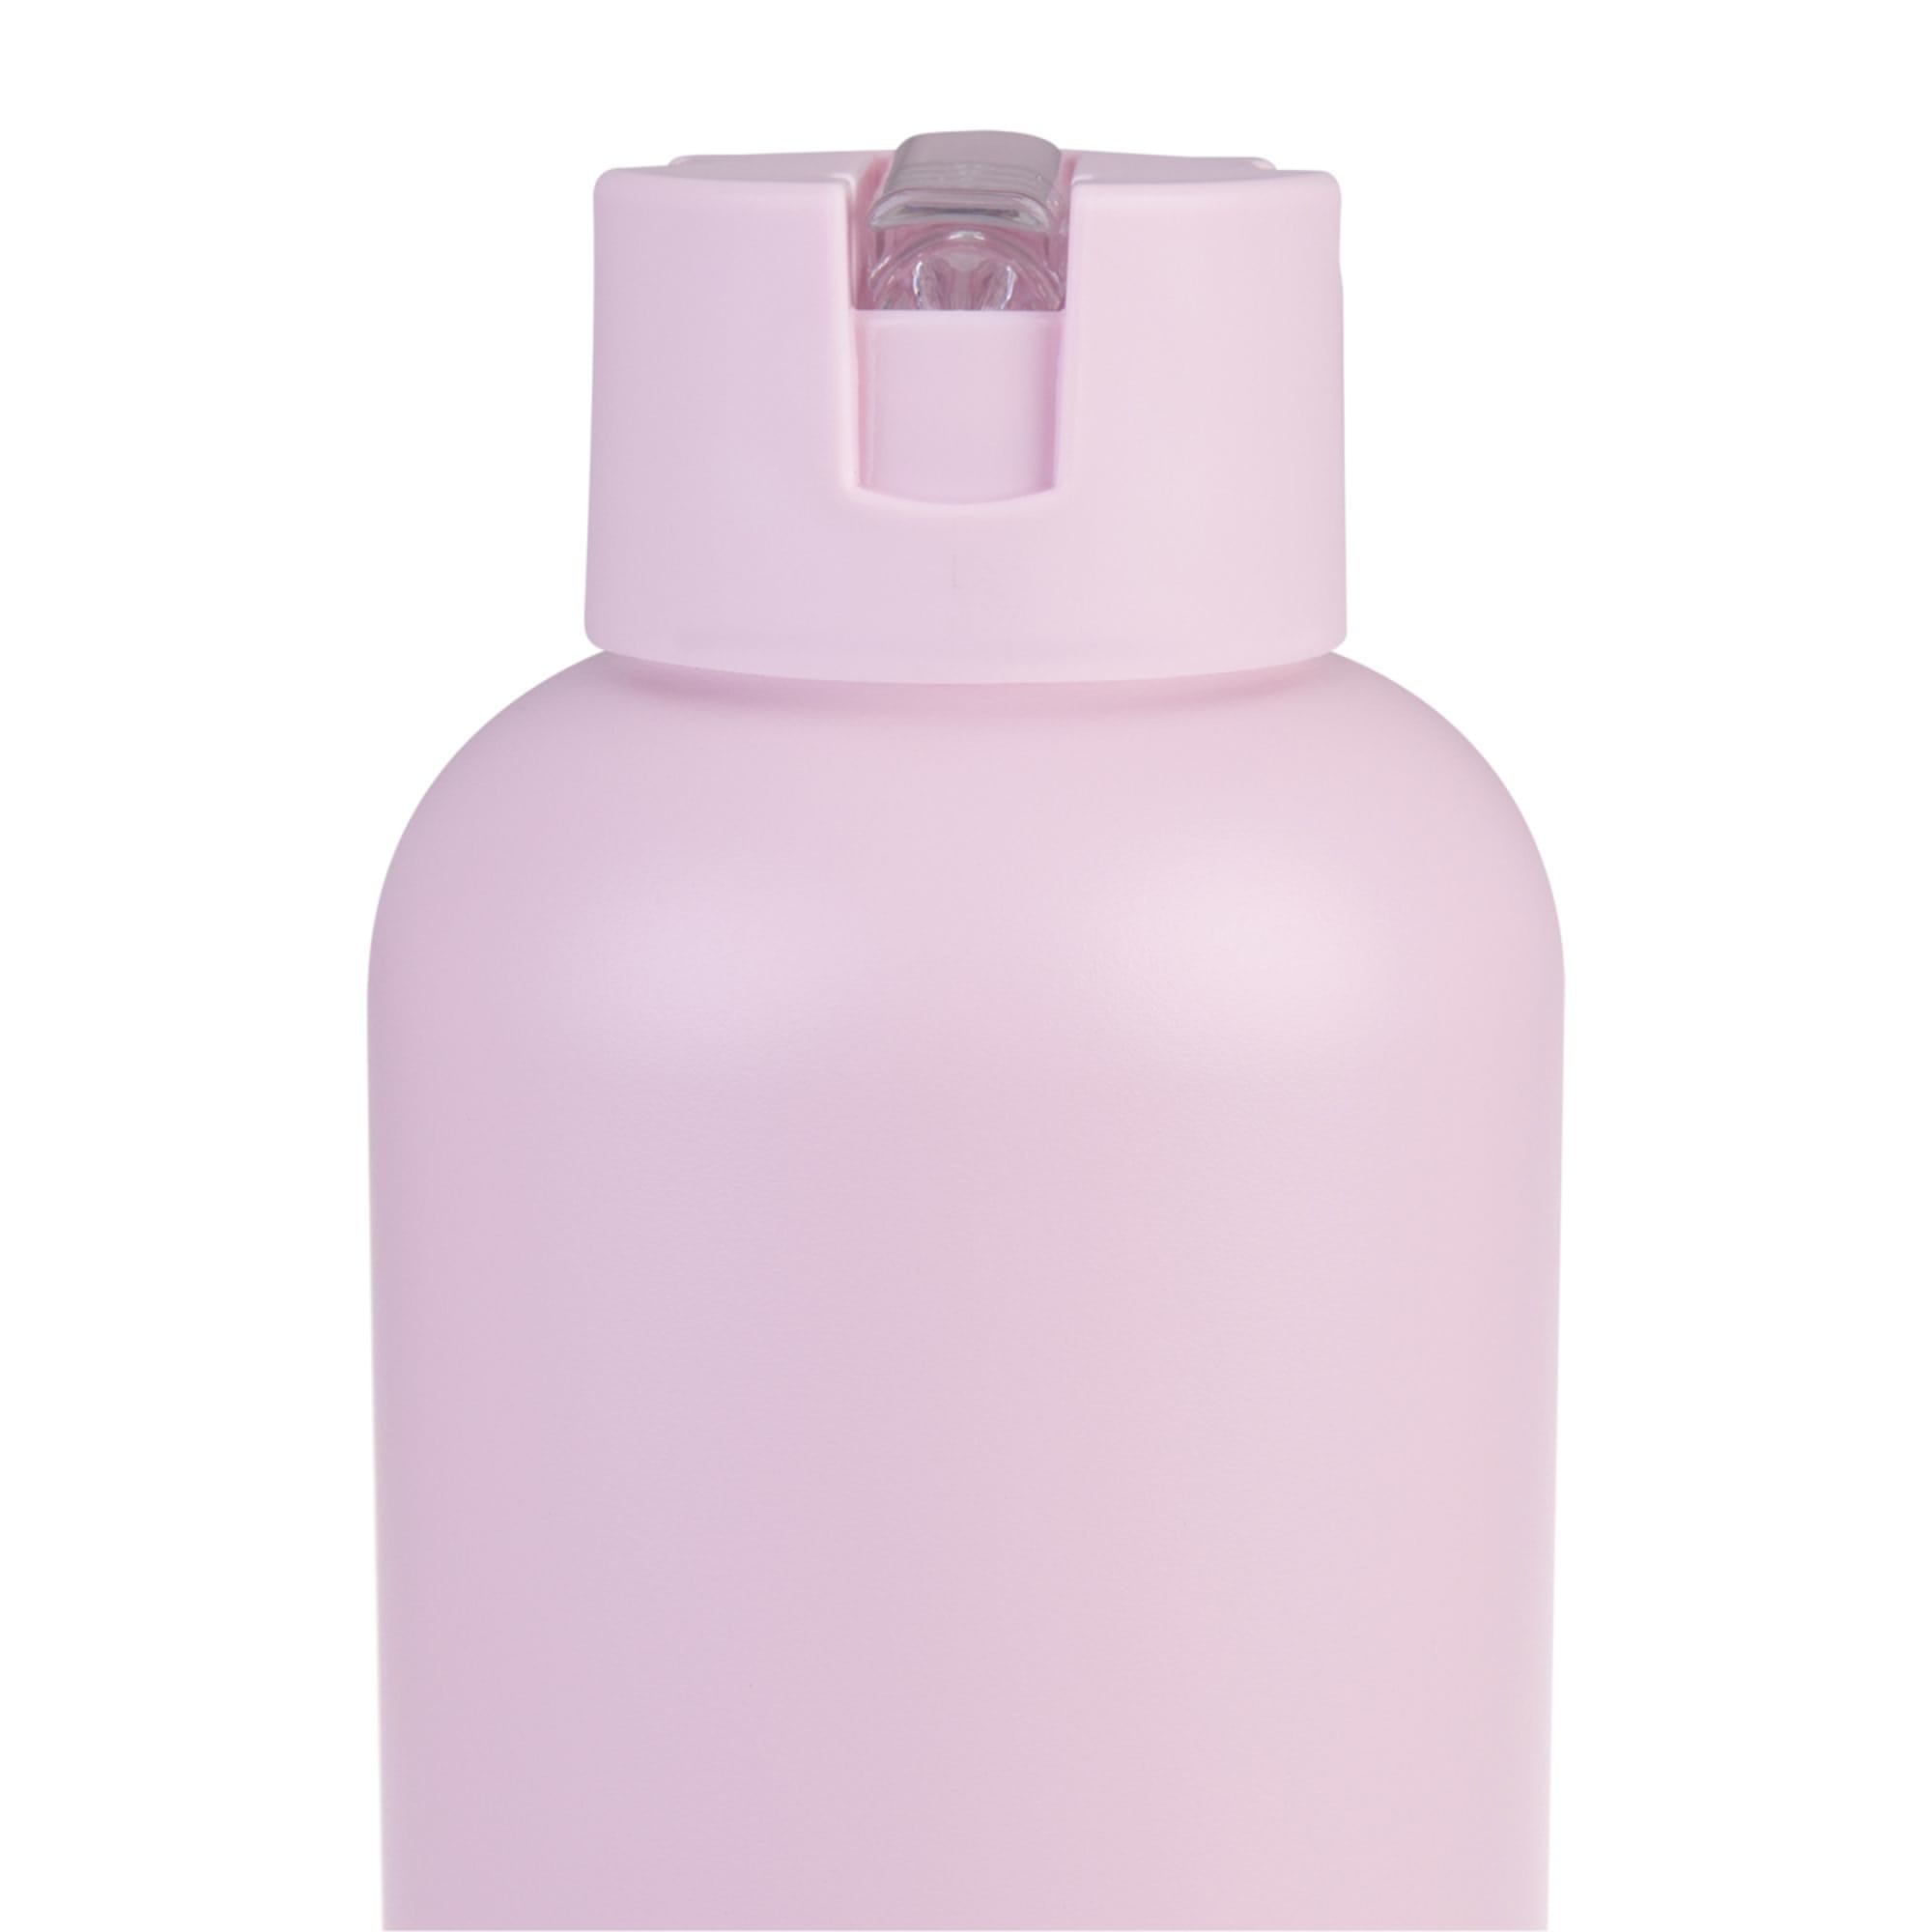 Oasis Moda Triple Wall Insulated Drink Bottle 1.5L Pink Lemonade Image 8